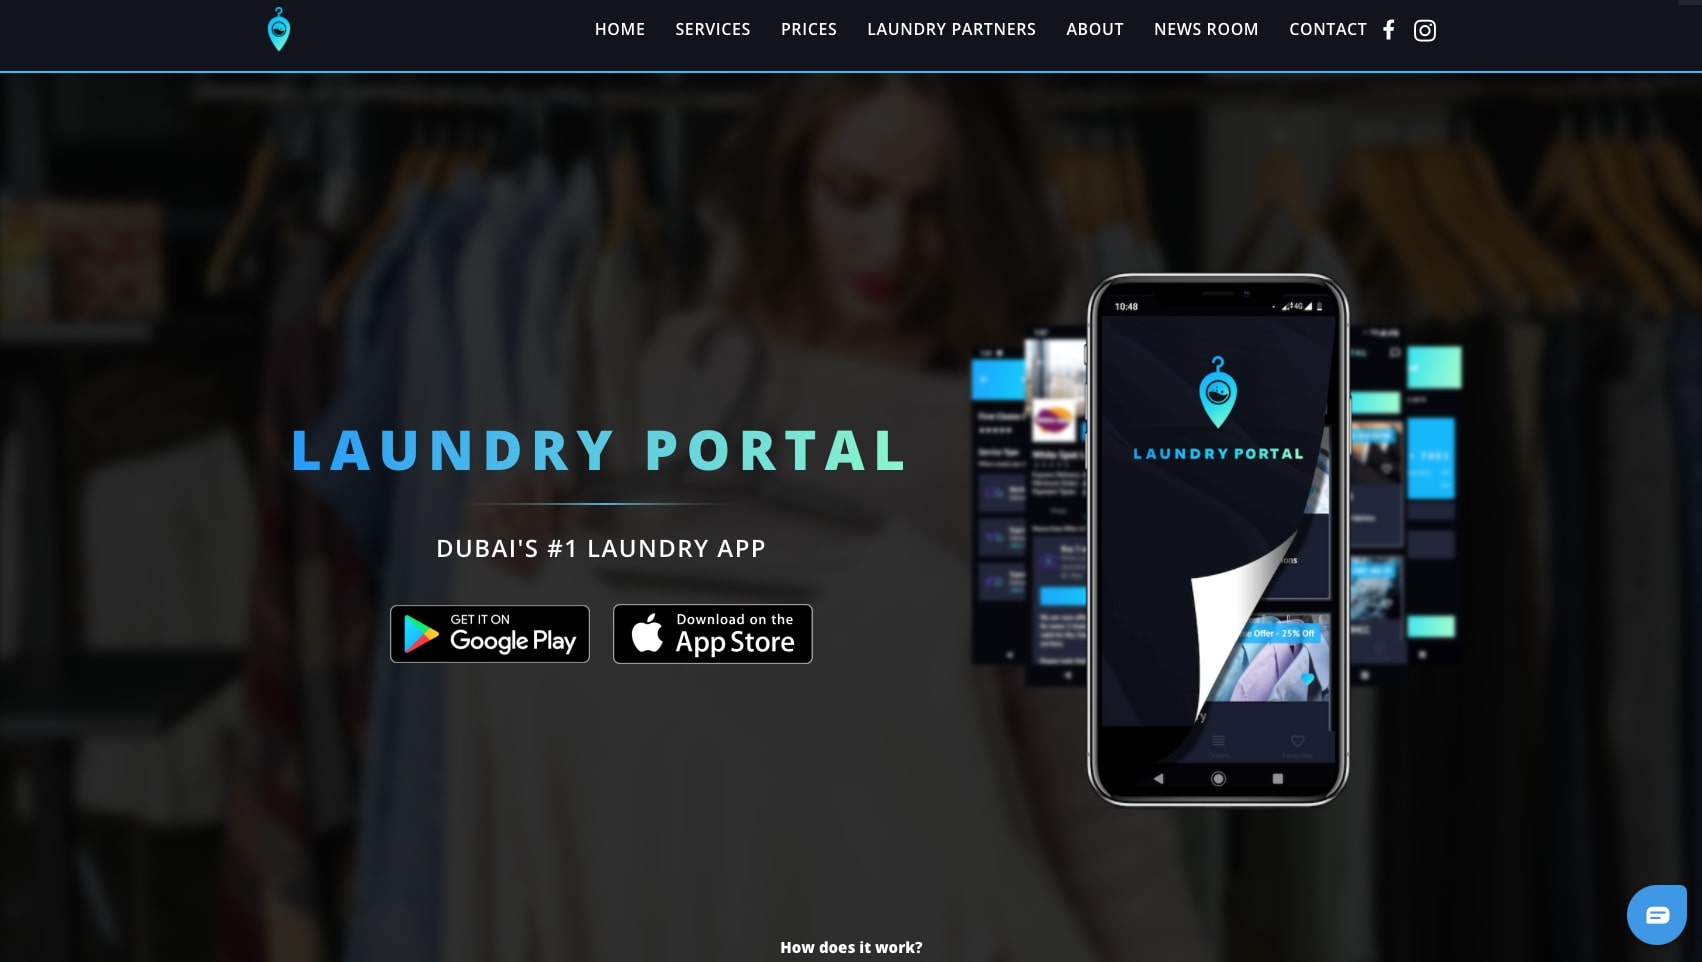 Laundry portal website SaaS 2020